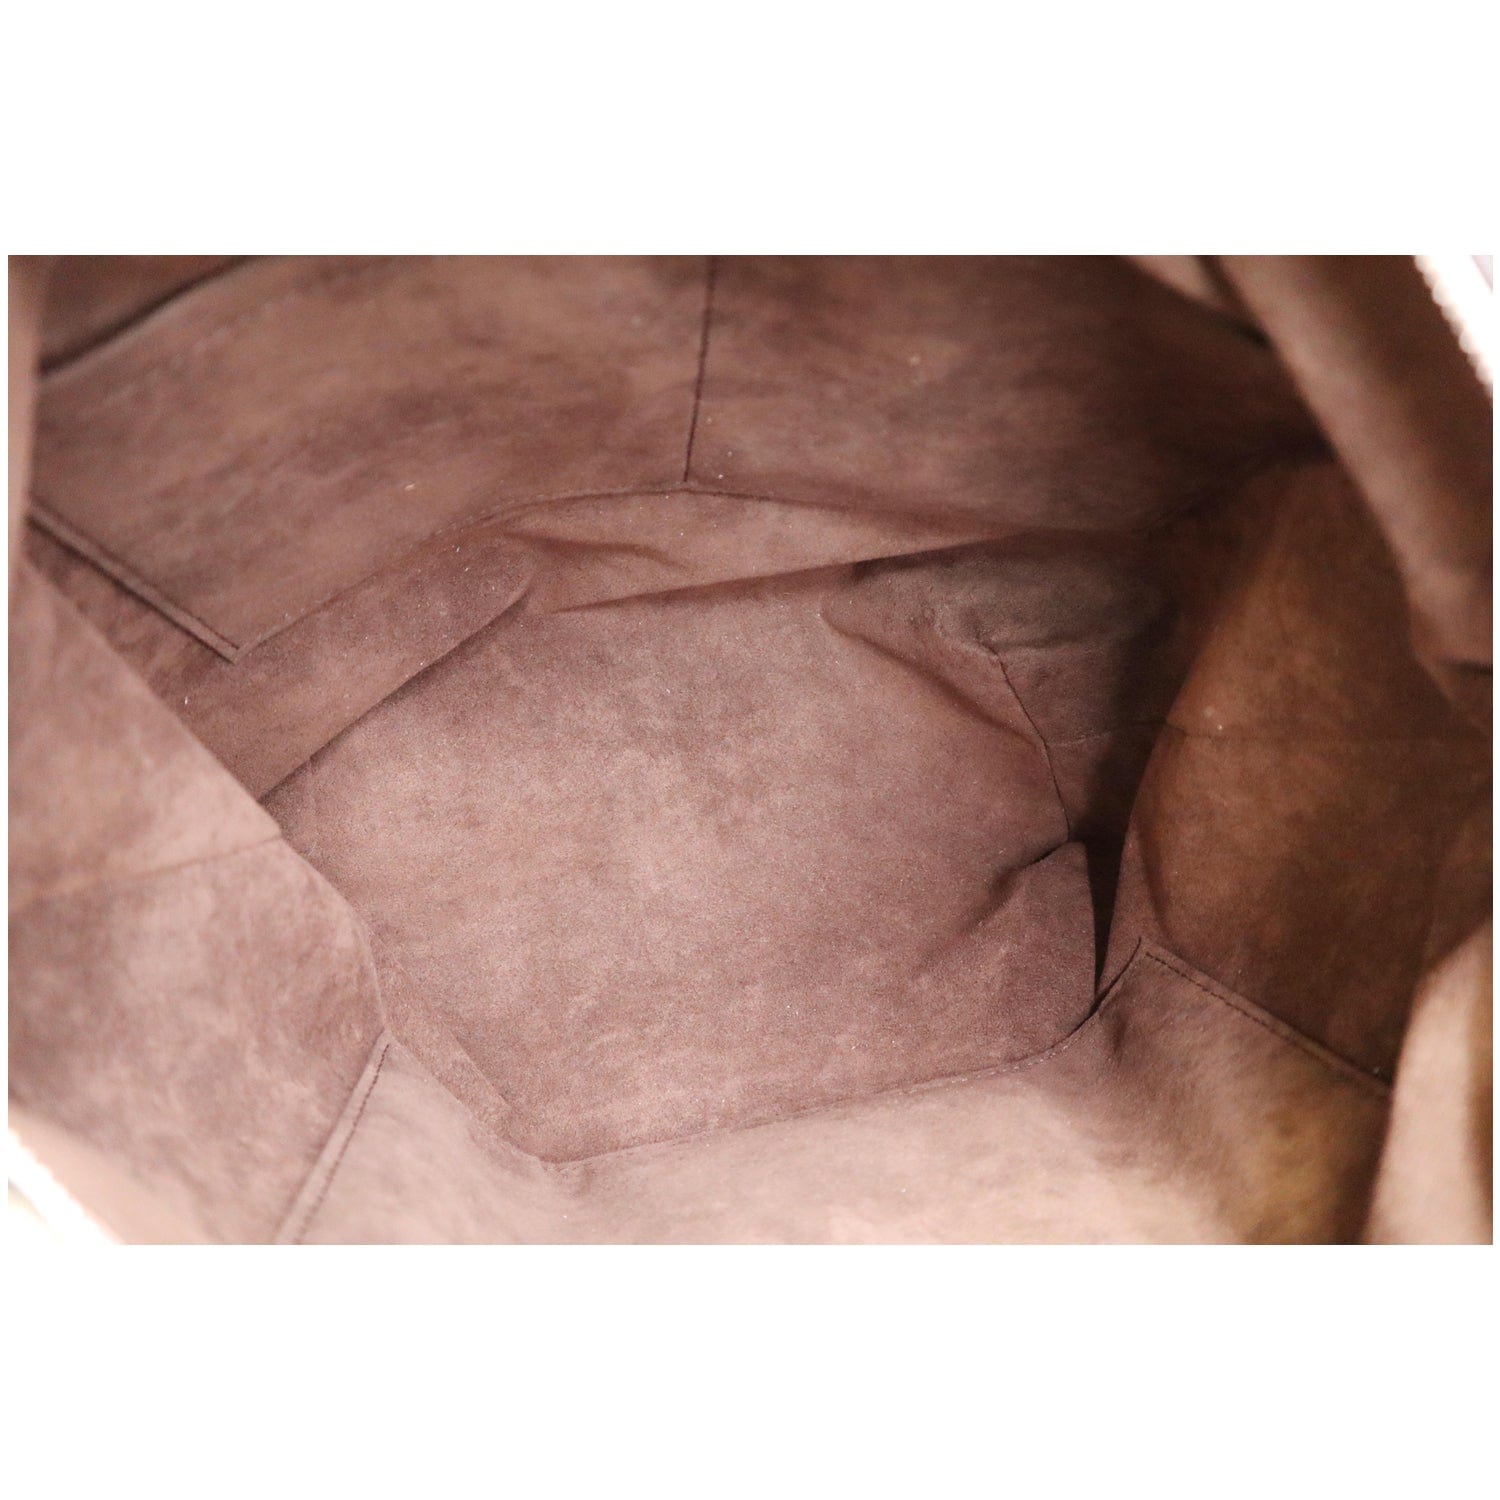 Louis Vuitton Asteria Handbag Mahina Leather Pink 2228279